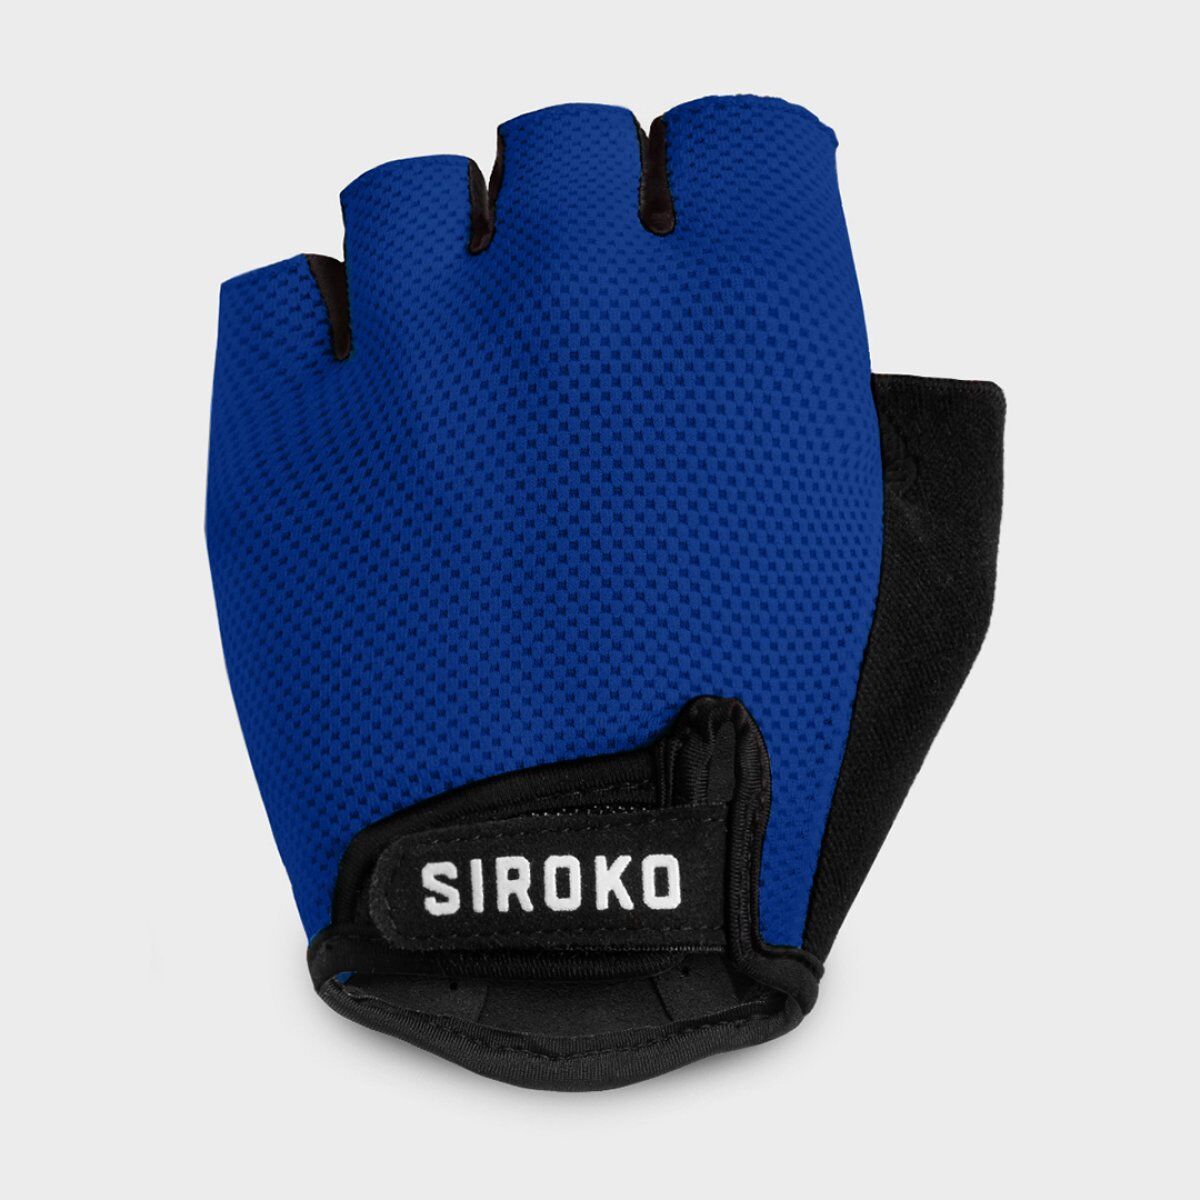 siroko -20% guanti bici aero dark blue taglia xxs